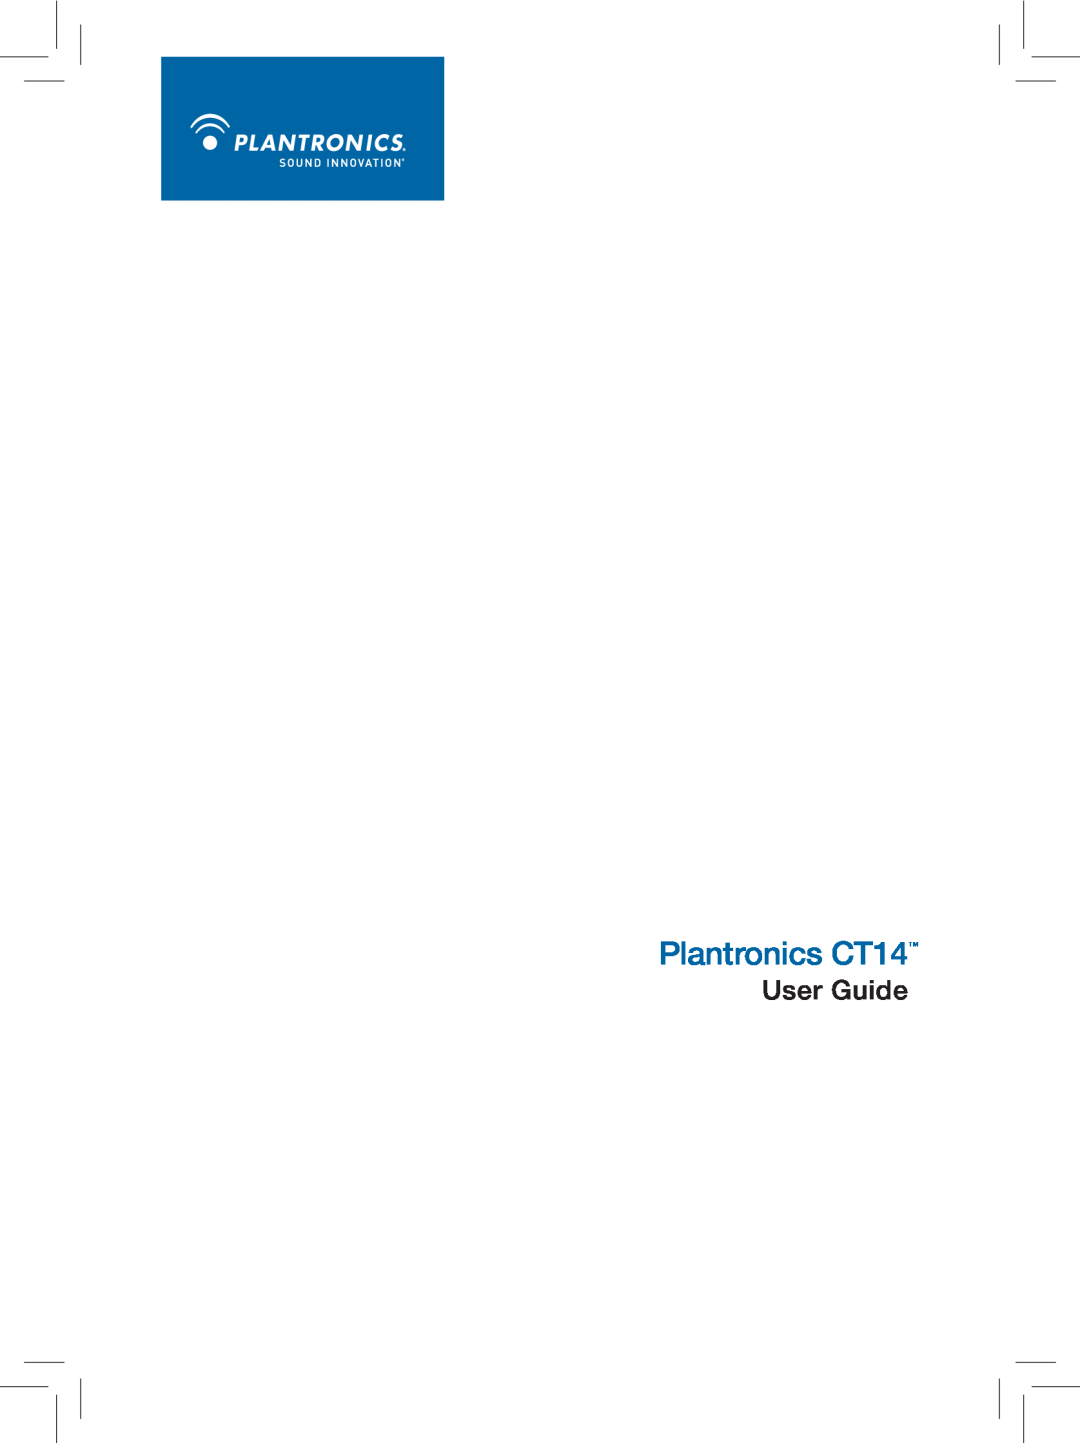 Plantronics manual Plantronics CT14, User Guide 